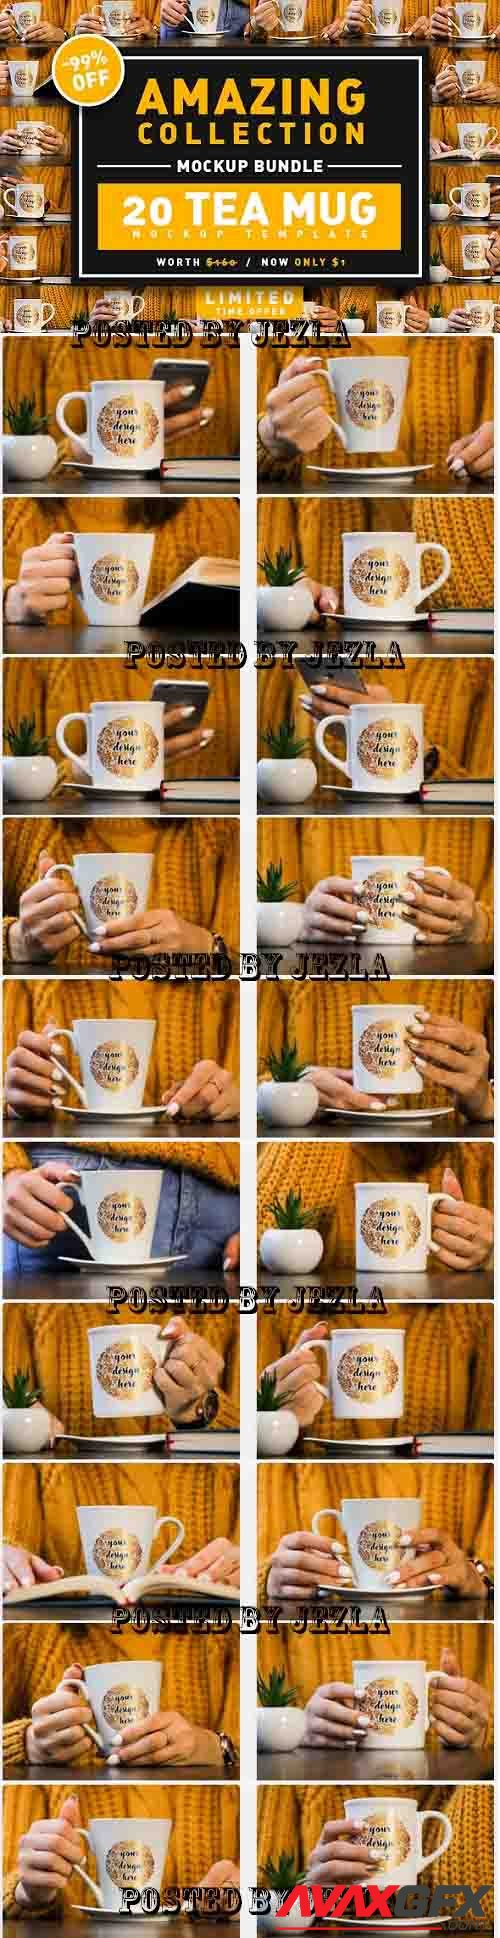 Tea Mug Mockup Bundle - 20 Premium Graphics